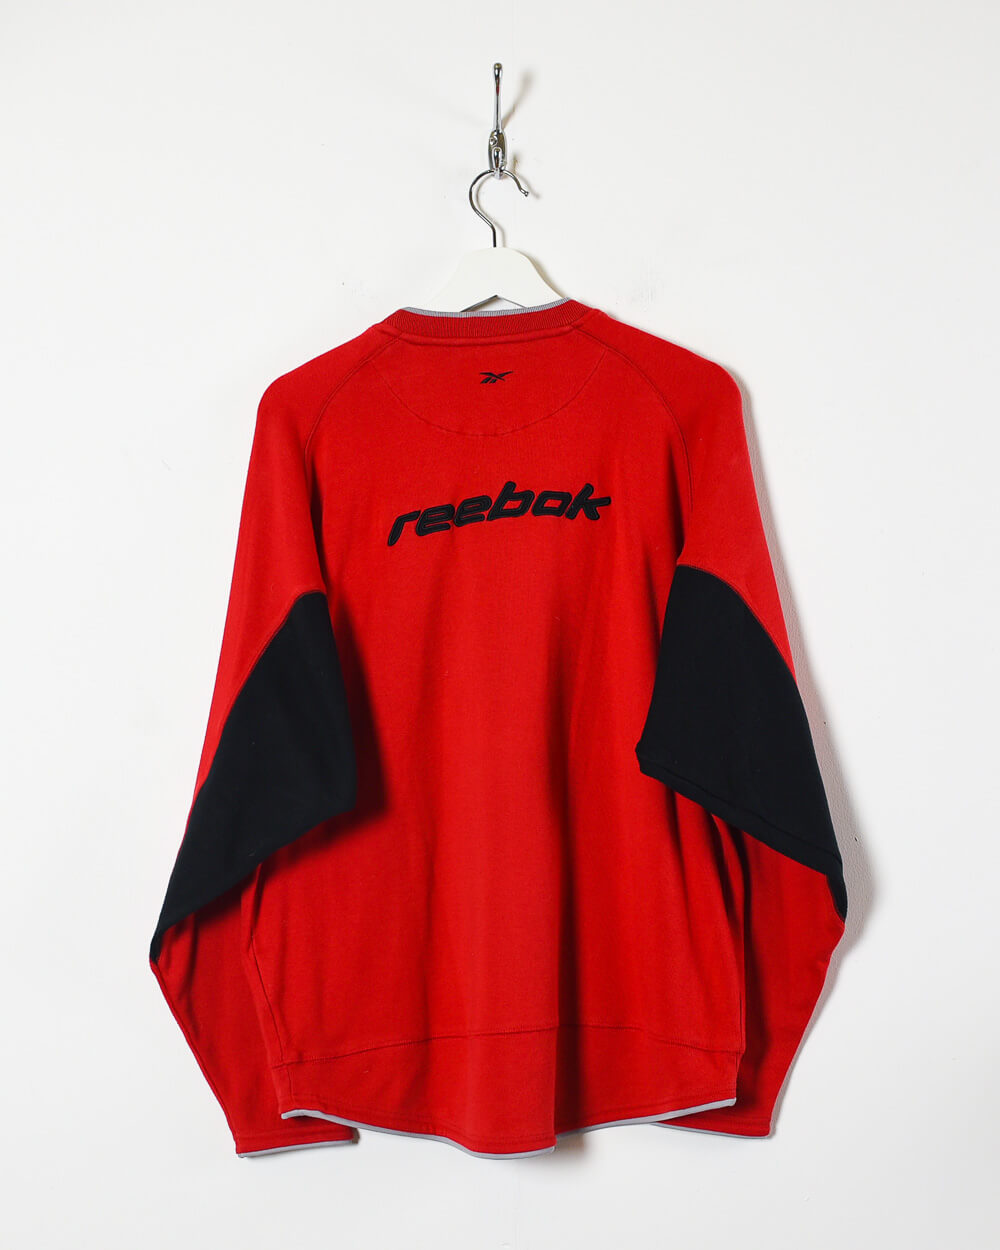 Red Reebok Liverpool 2002/03 Sweatshirt - Medium